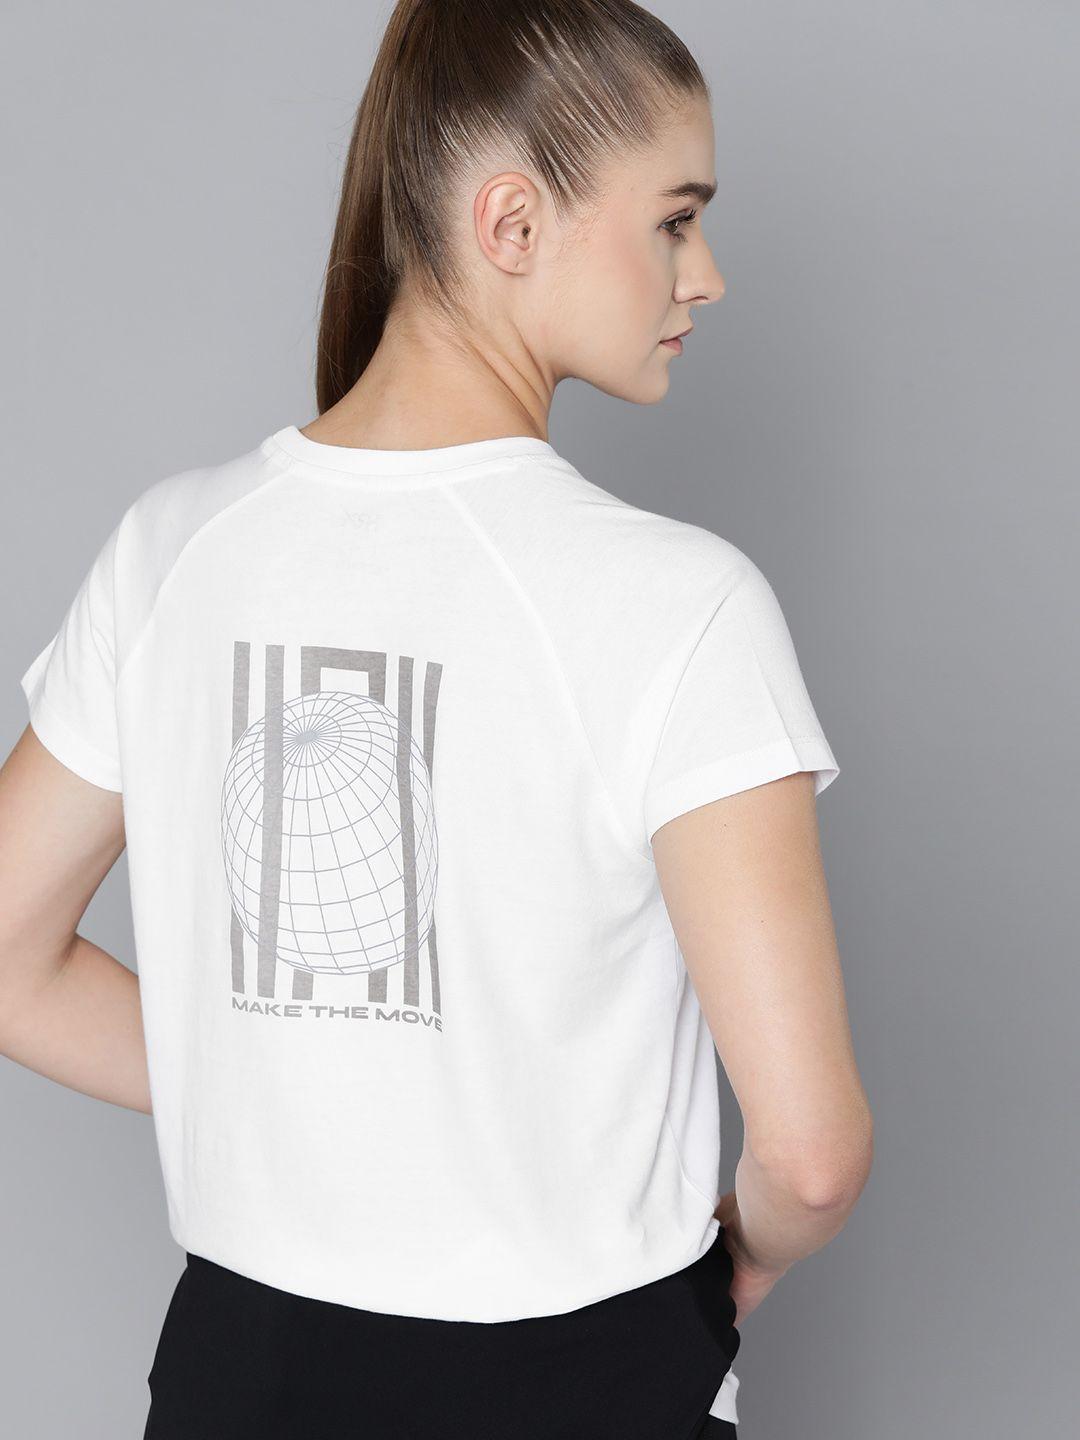 hrx by hrithik roshan cotton back printed casual t-shirt